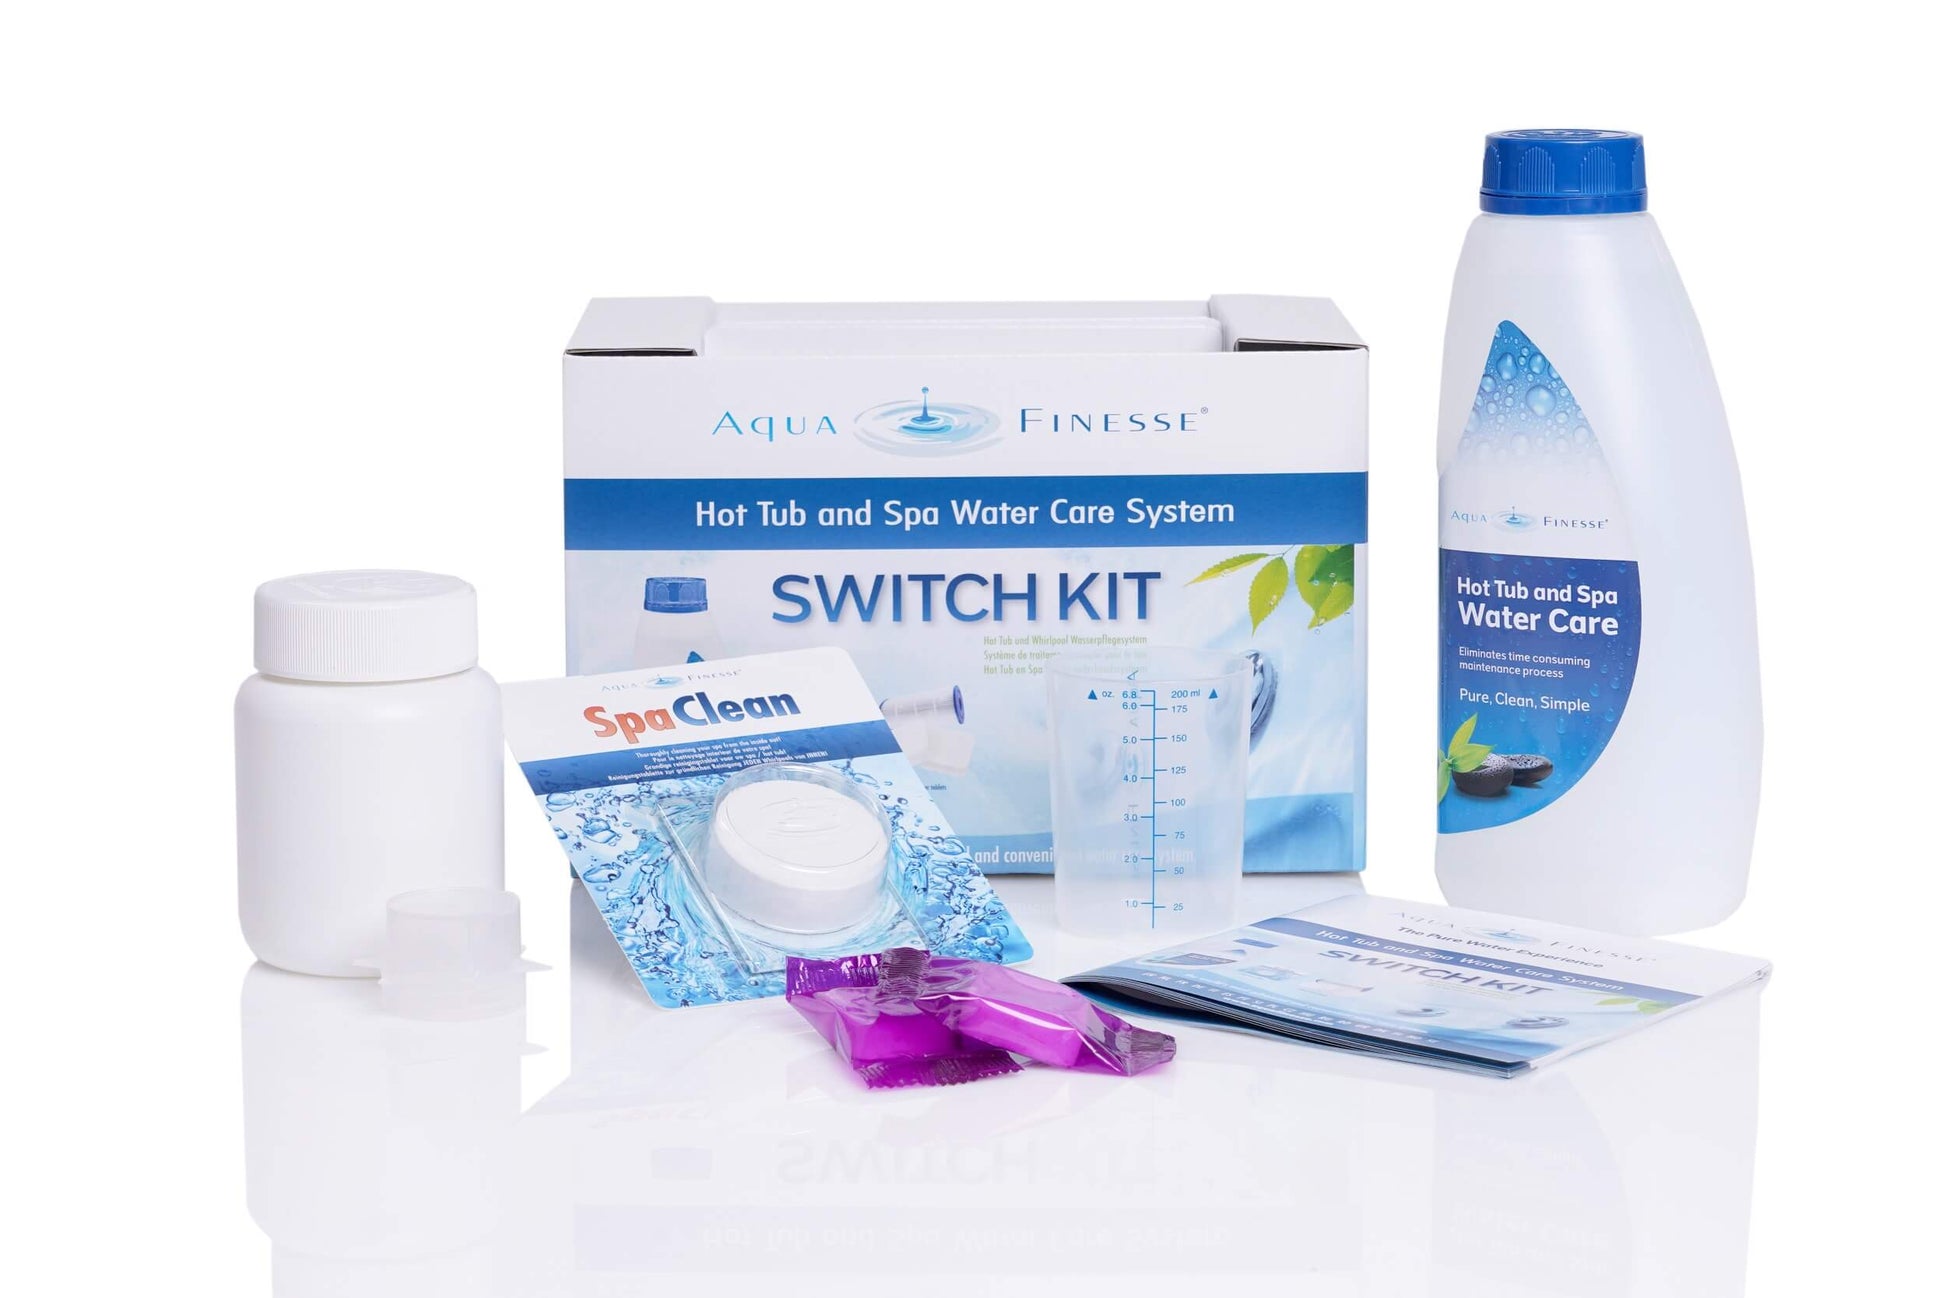 AquaFinesse Switchkit Hot Tub & Spa Water Care box - Finesse Wellness BV